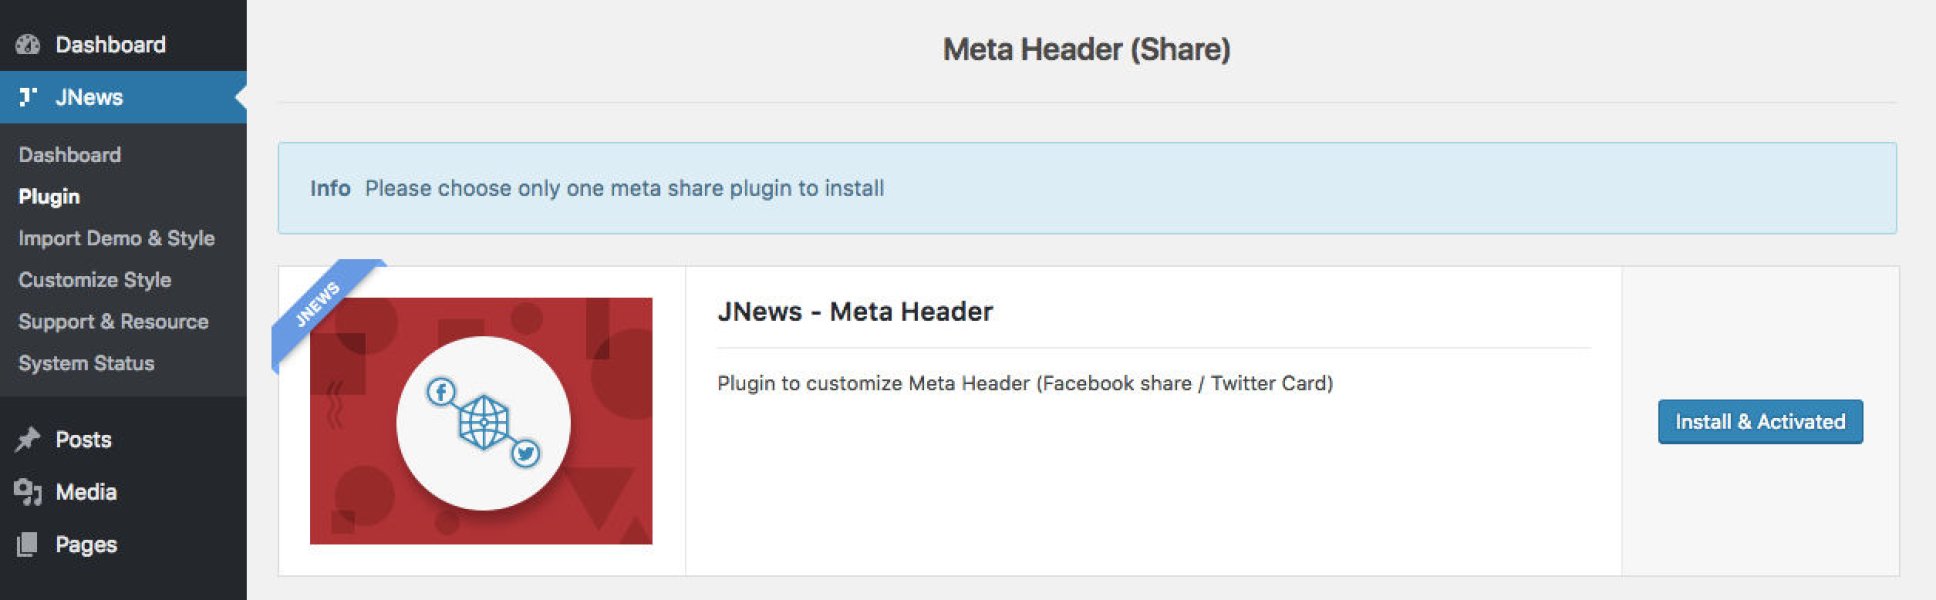 JNews - Meta Header